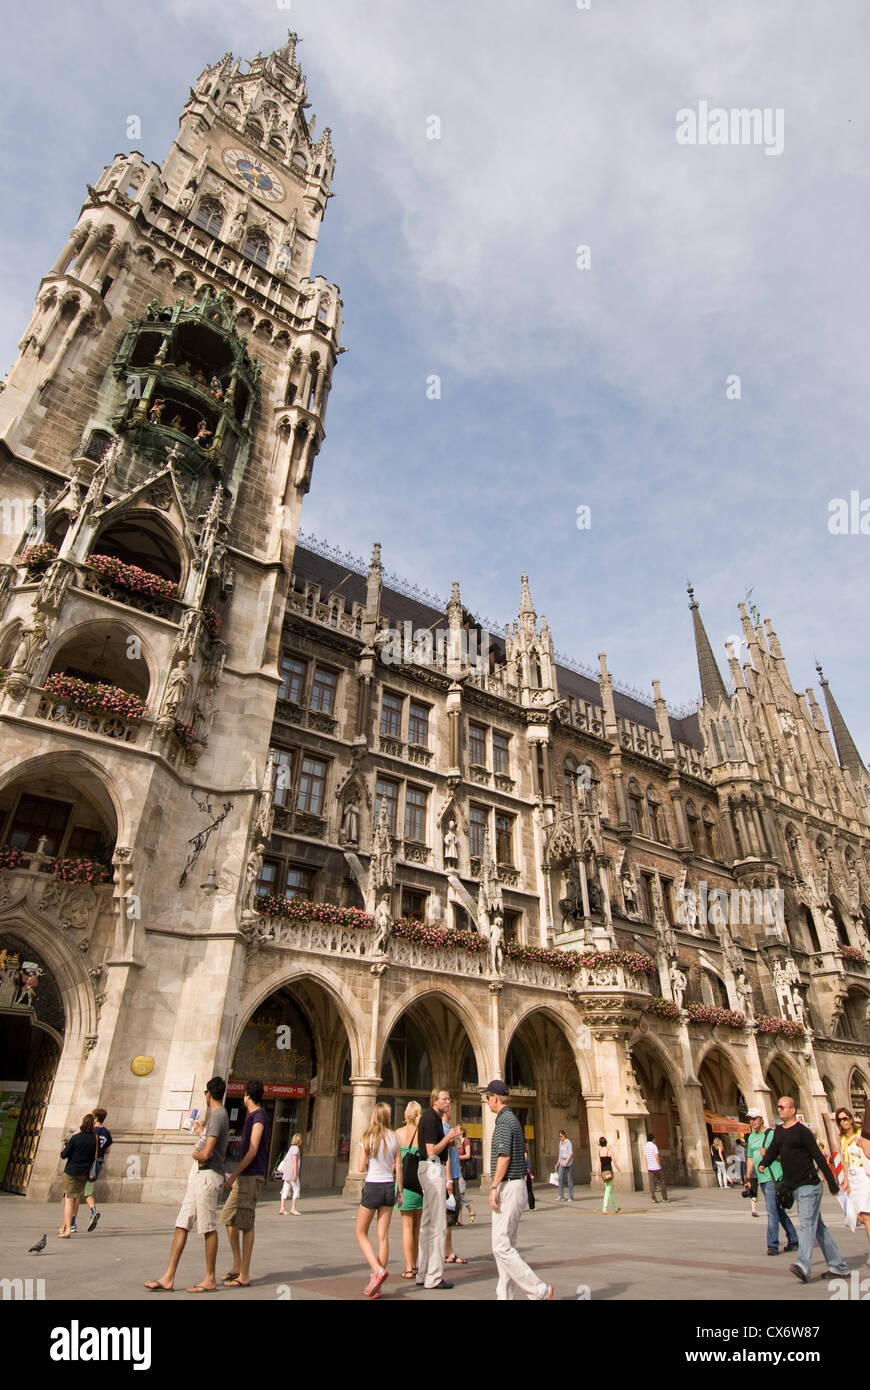 El famoso Glockenspiel de Frankfurt, Alemania. Foto de stock